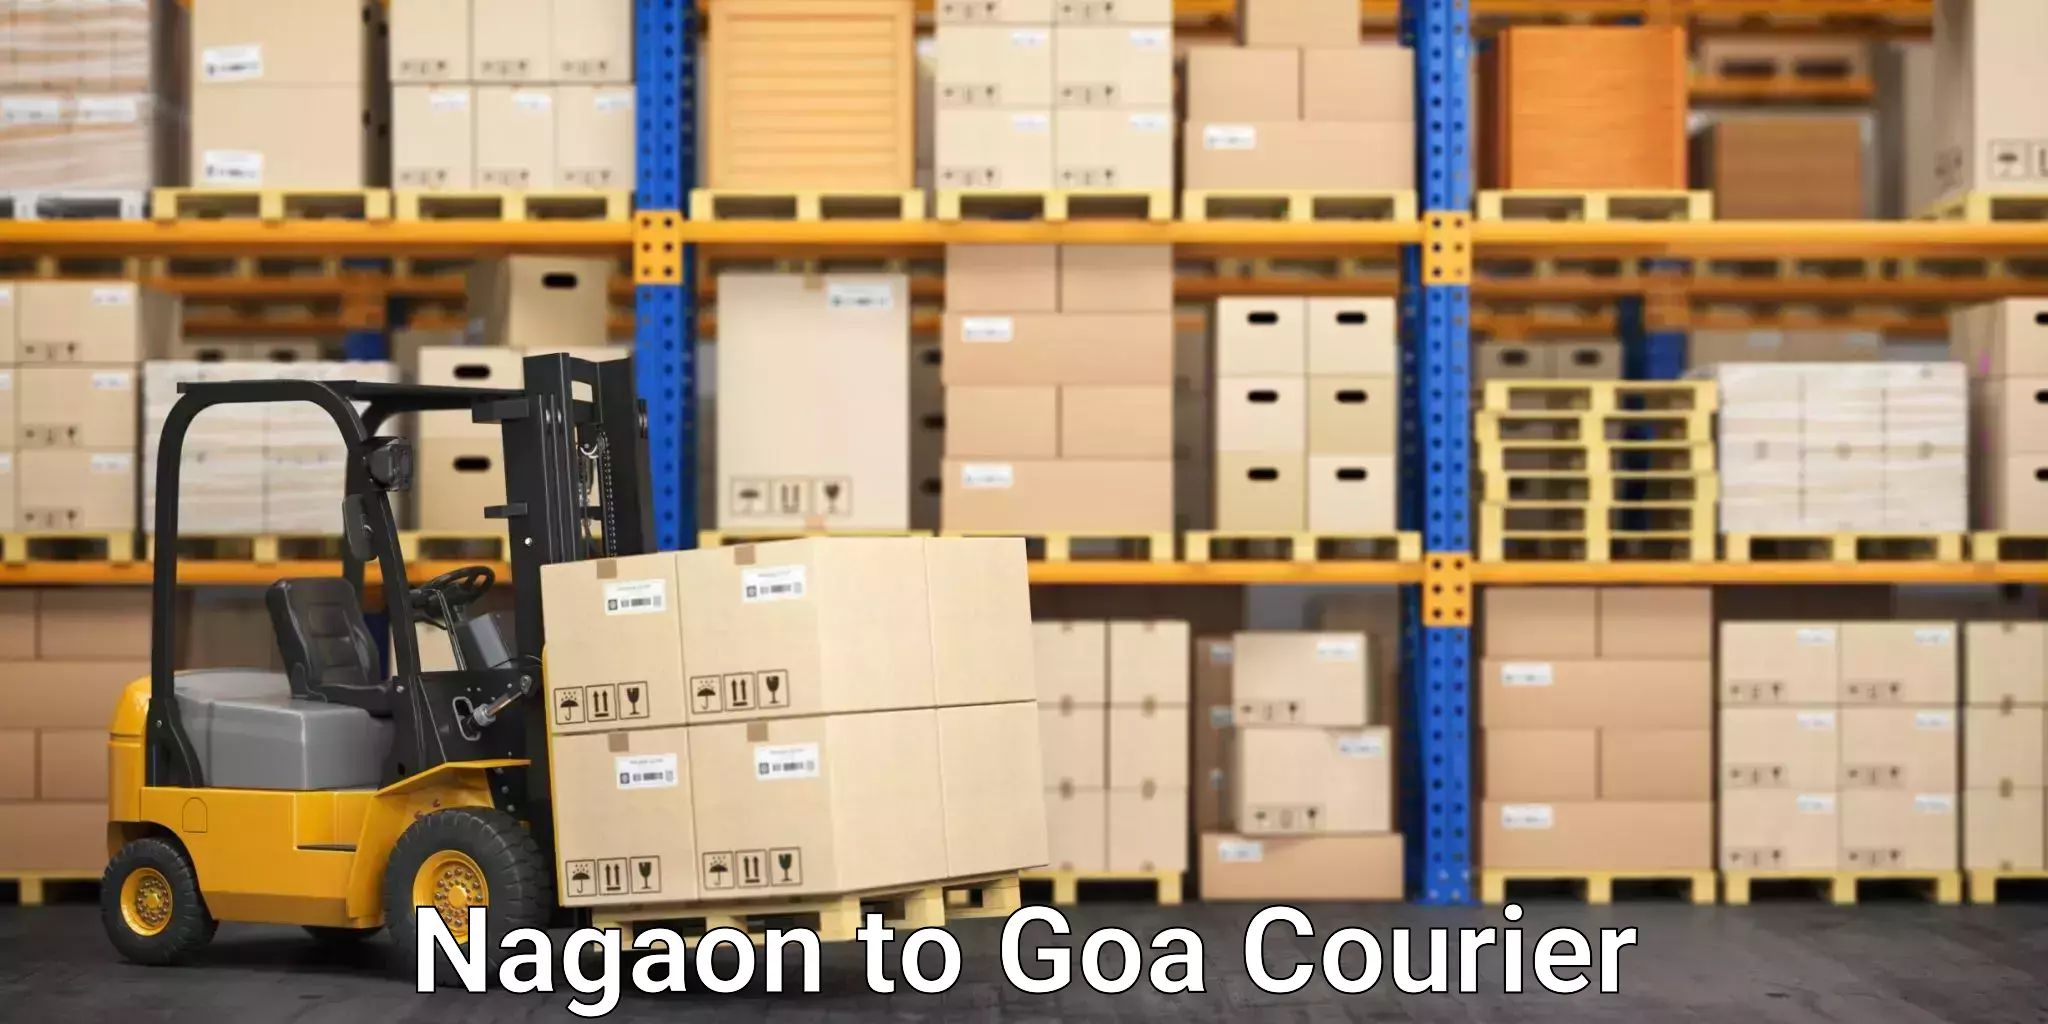 Courier service comparison Nagaon to Goa